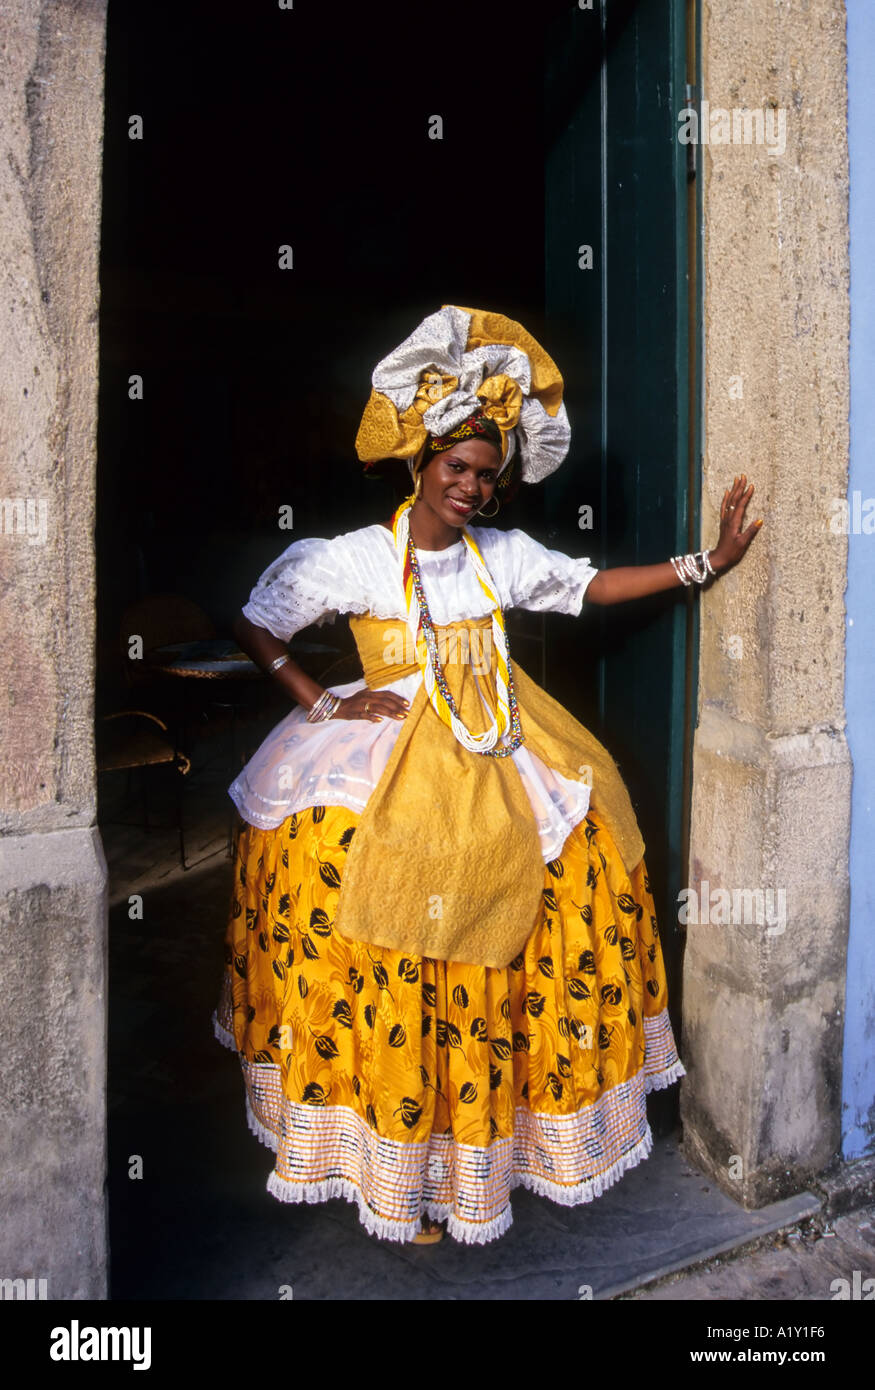 Bahiana woman in traditional dress, Salvador, Bahia, Brazil Stock Photo -  Alamy